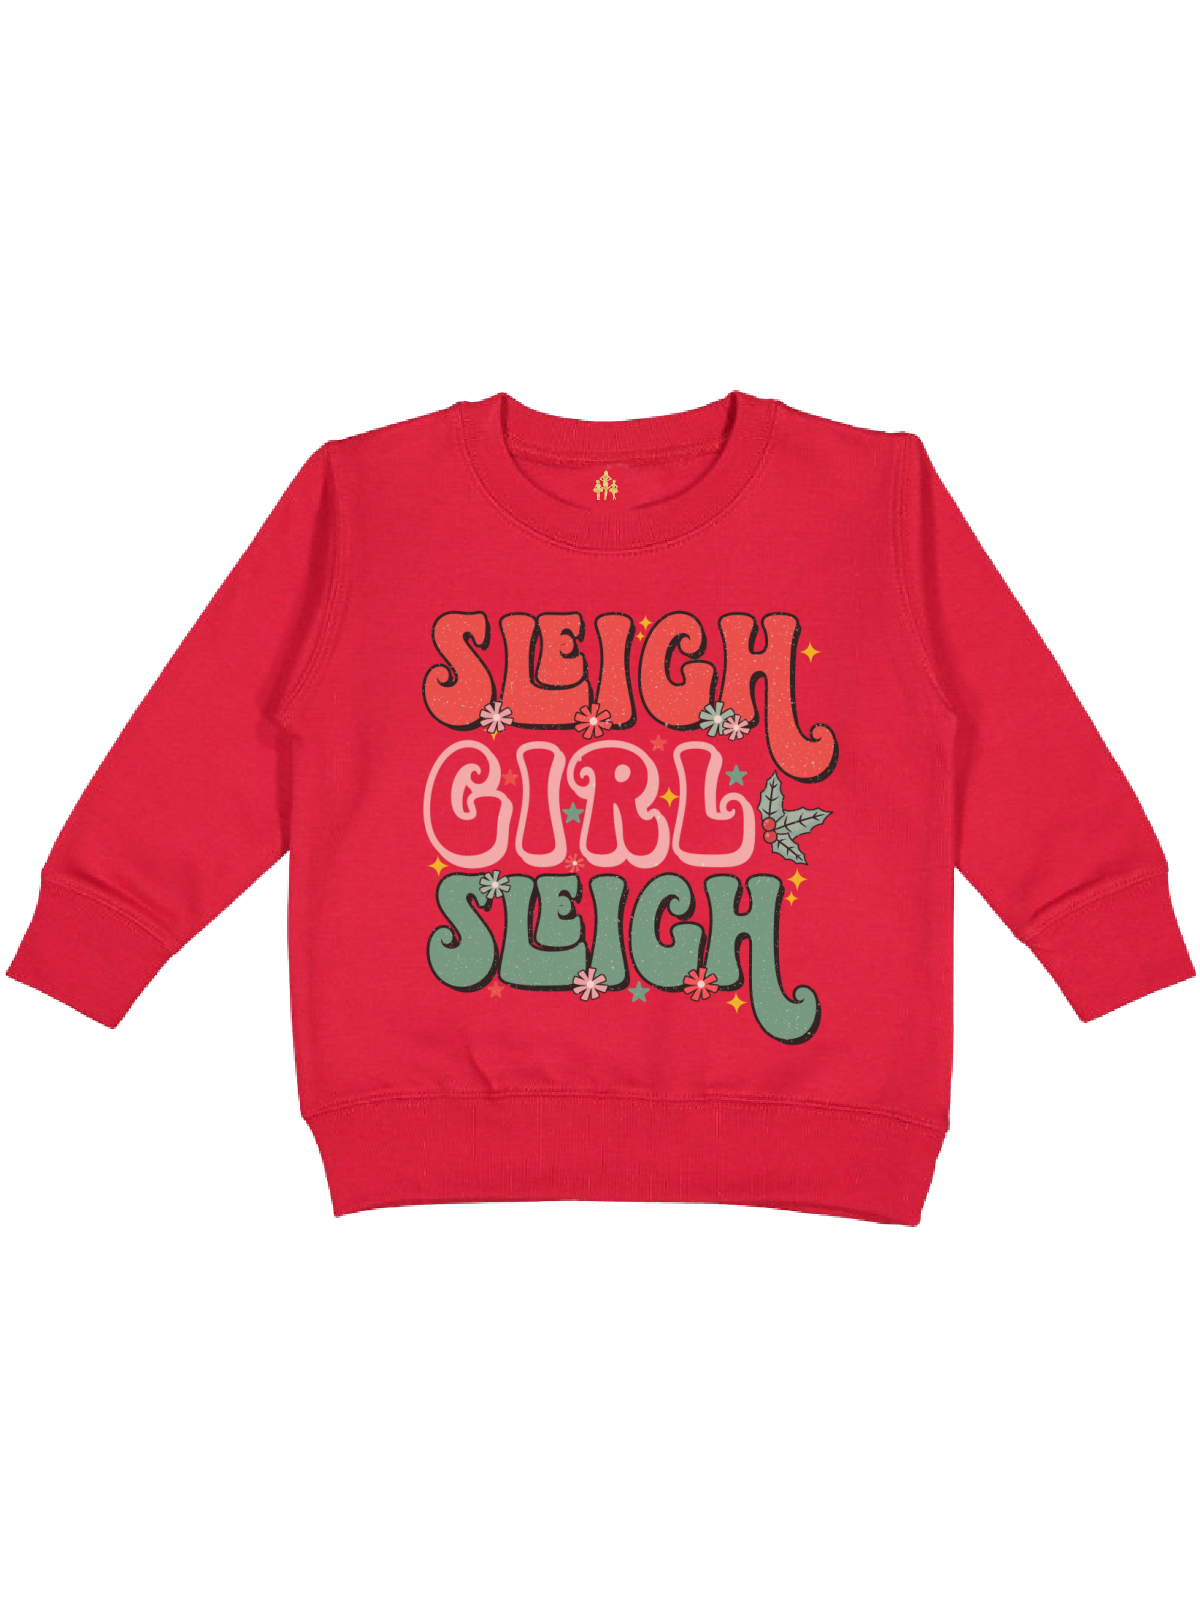 Sleigh Girl Sleigh Kids Christmas Sweatshirt